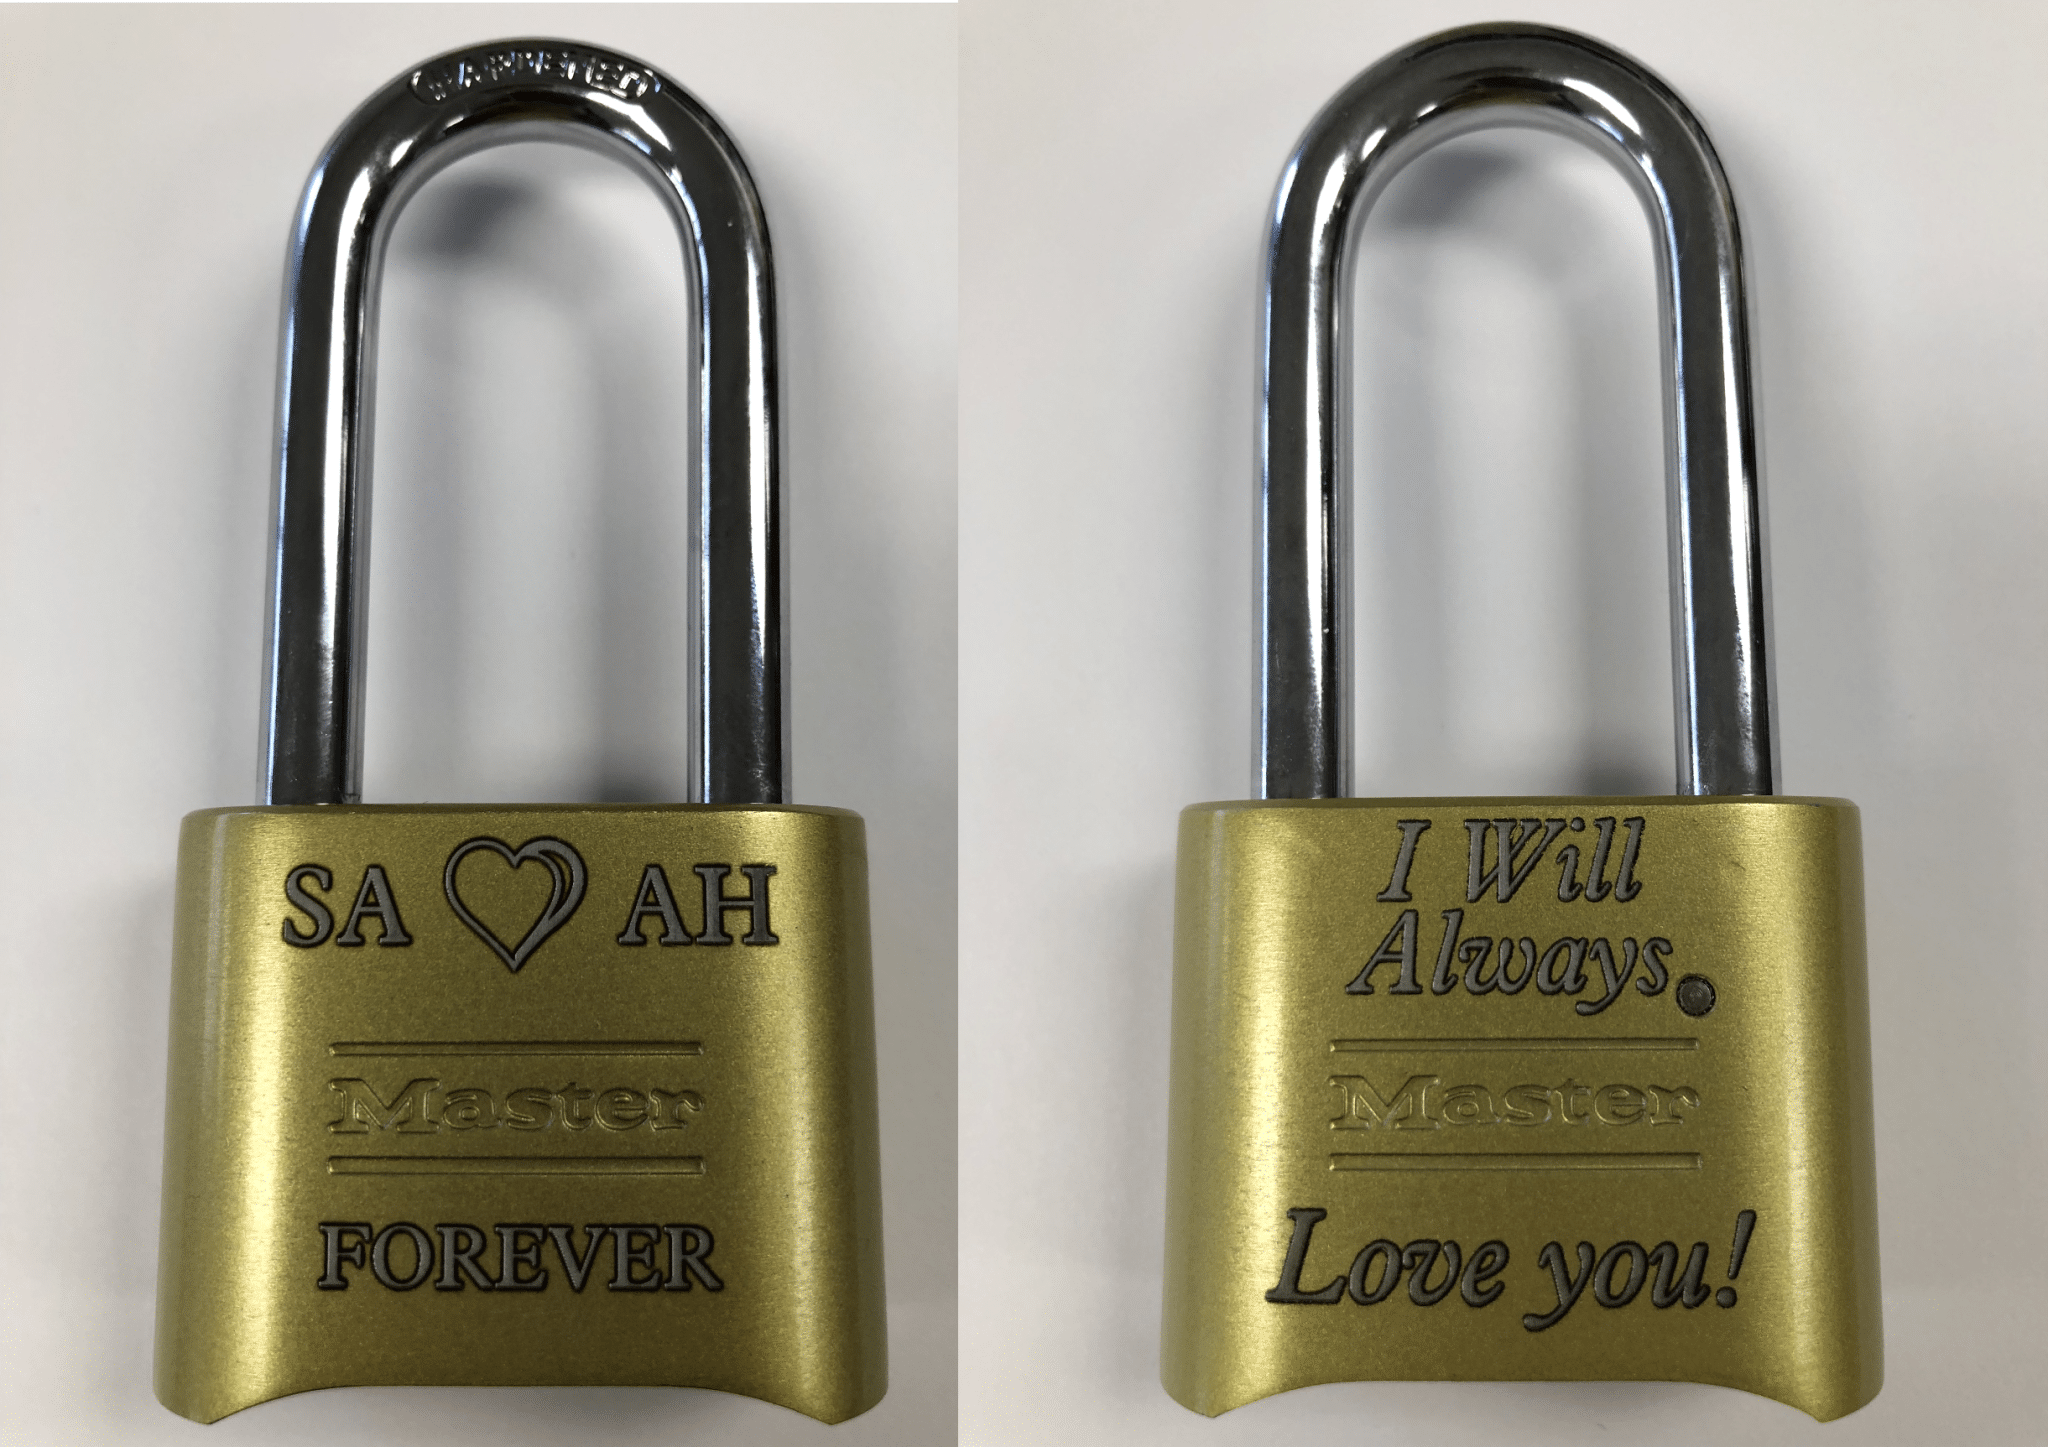 1 lock